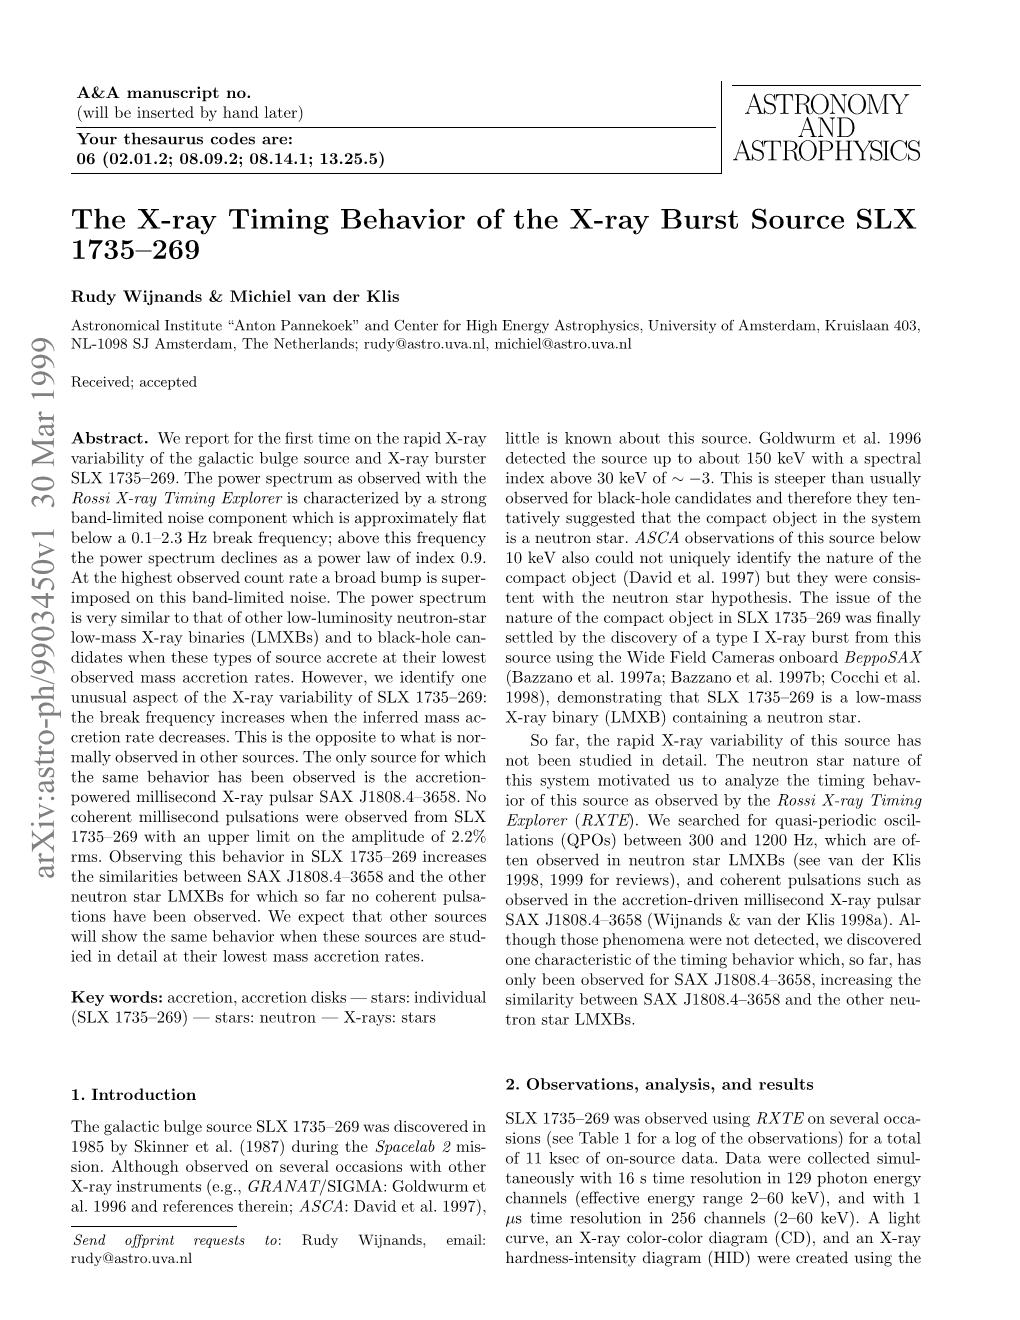 The X-Ray Timing Behavior of the X-Ray Burst Source SLX 1735-269